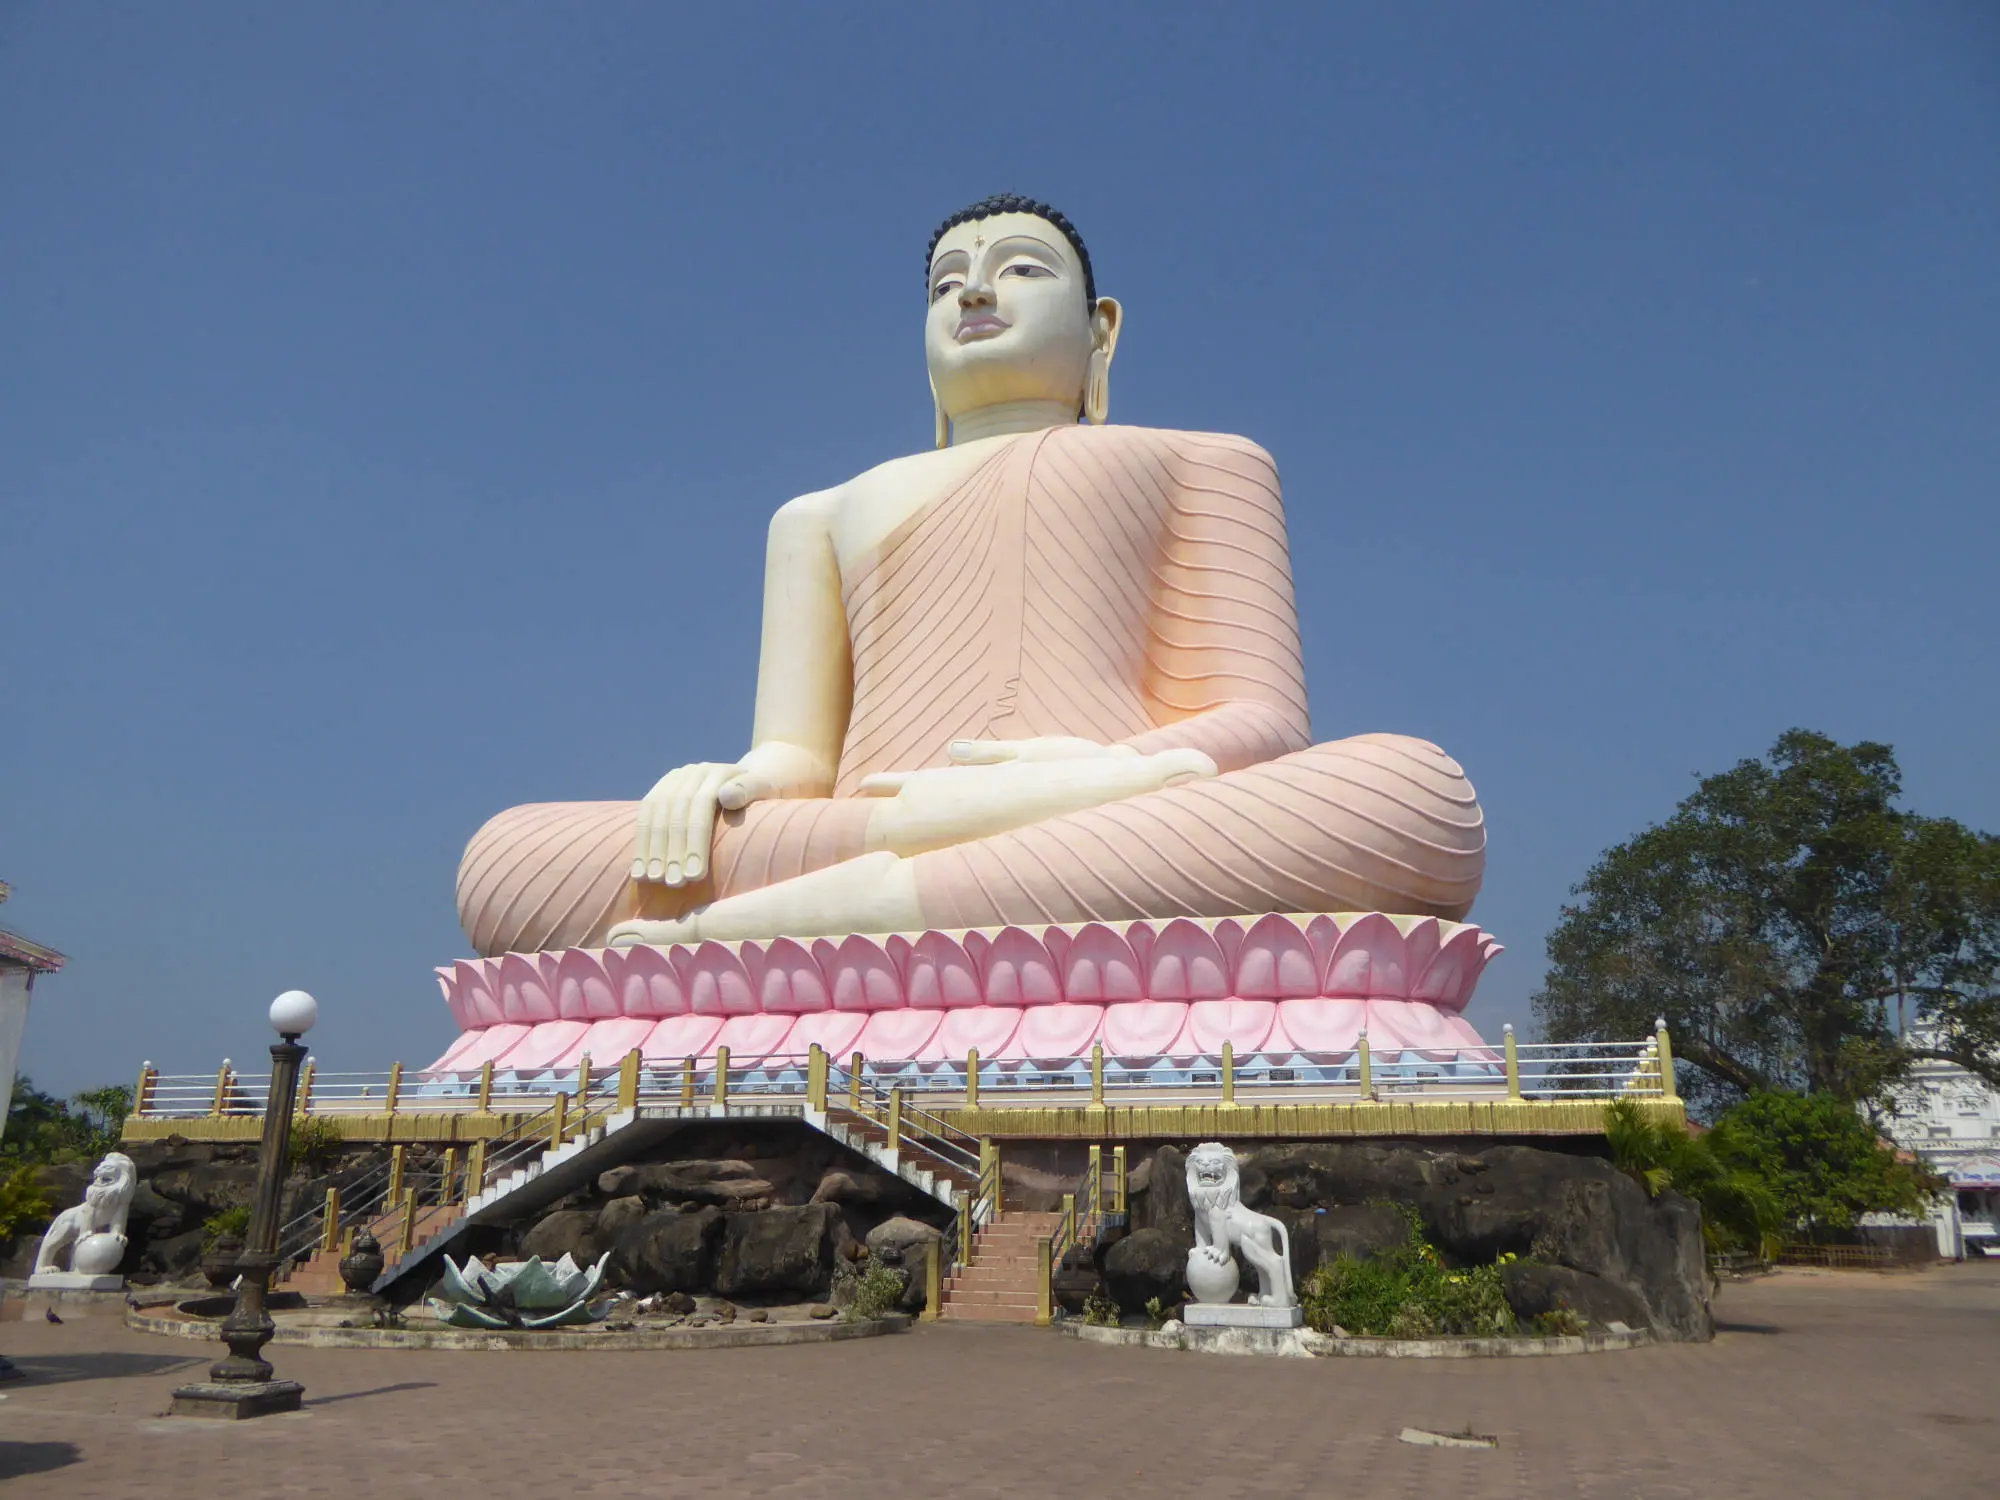 Seating Buddha, Kande Vihara Temple, Aluthgama